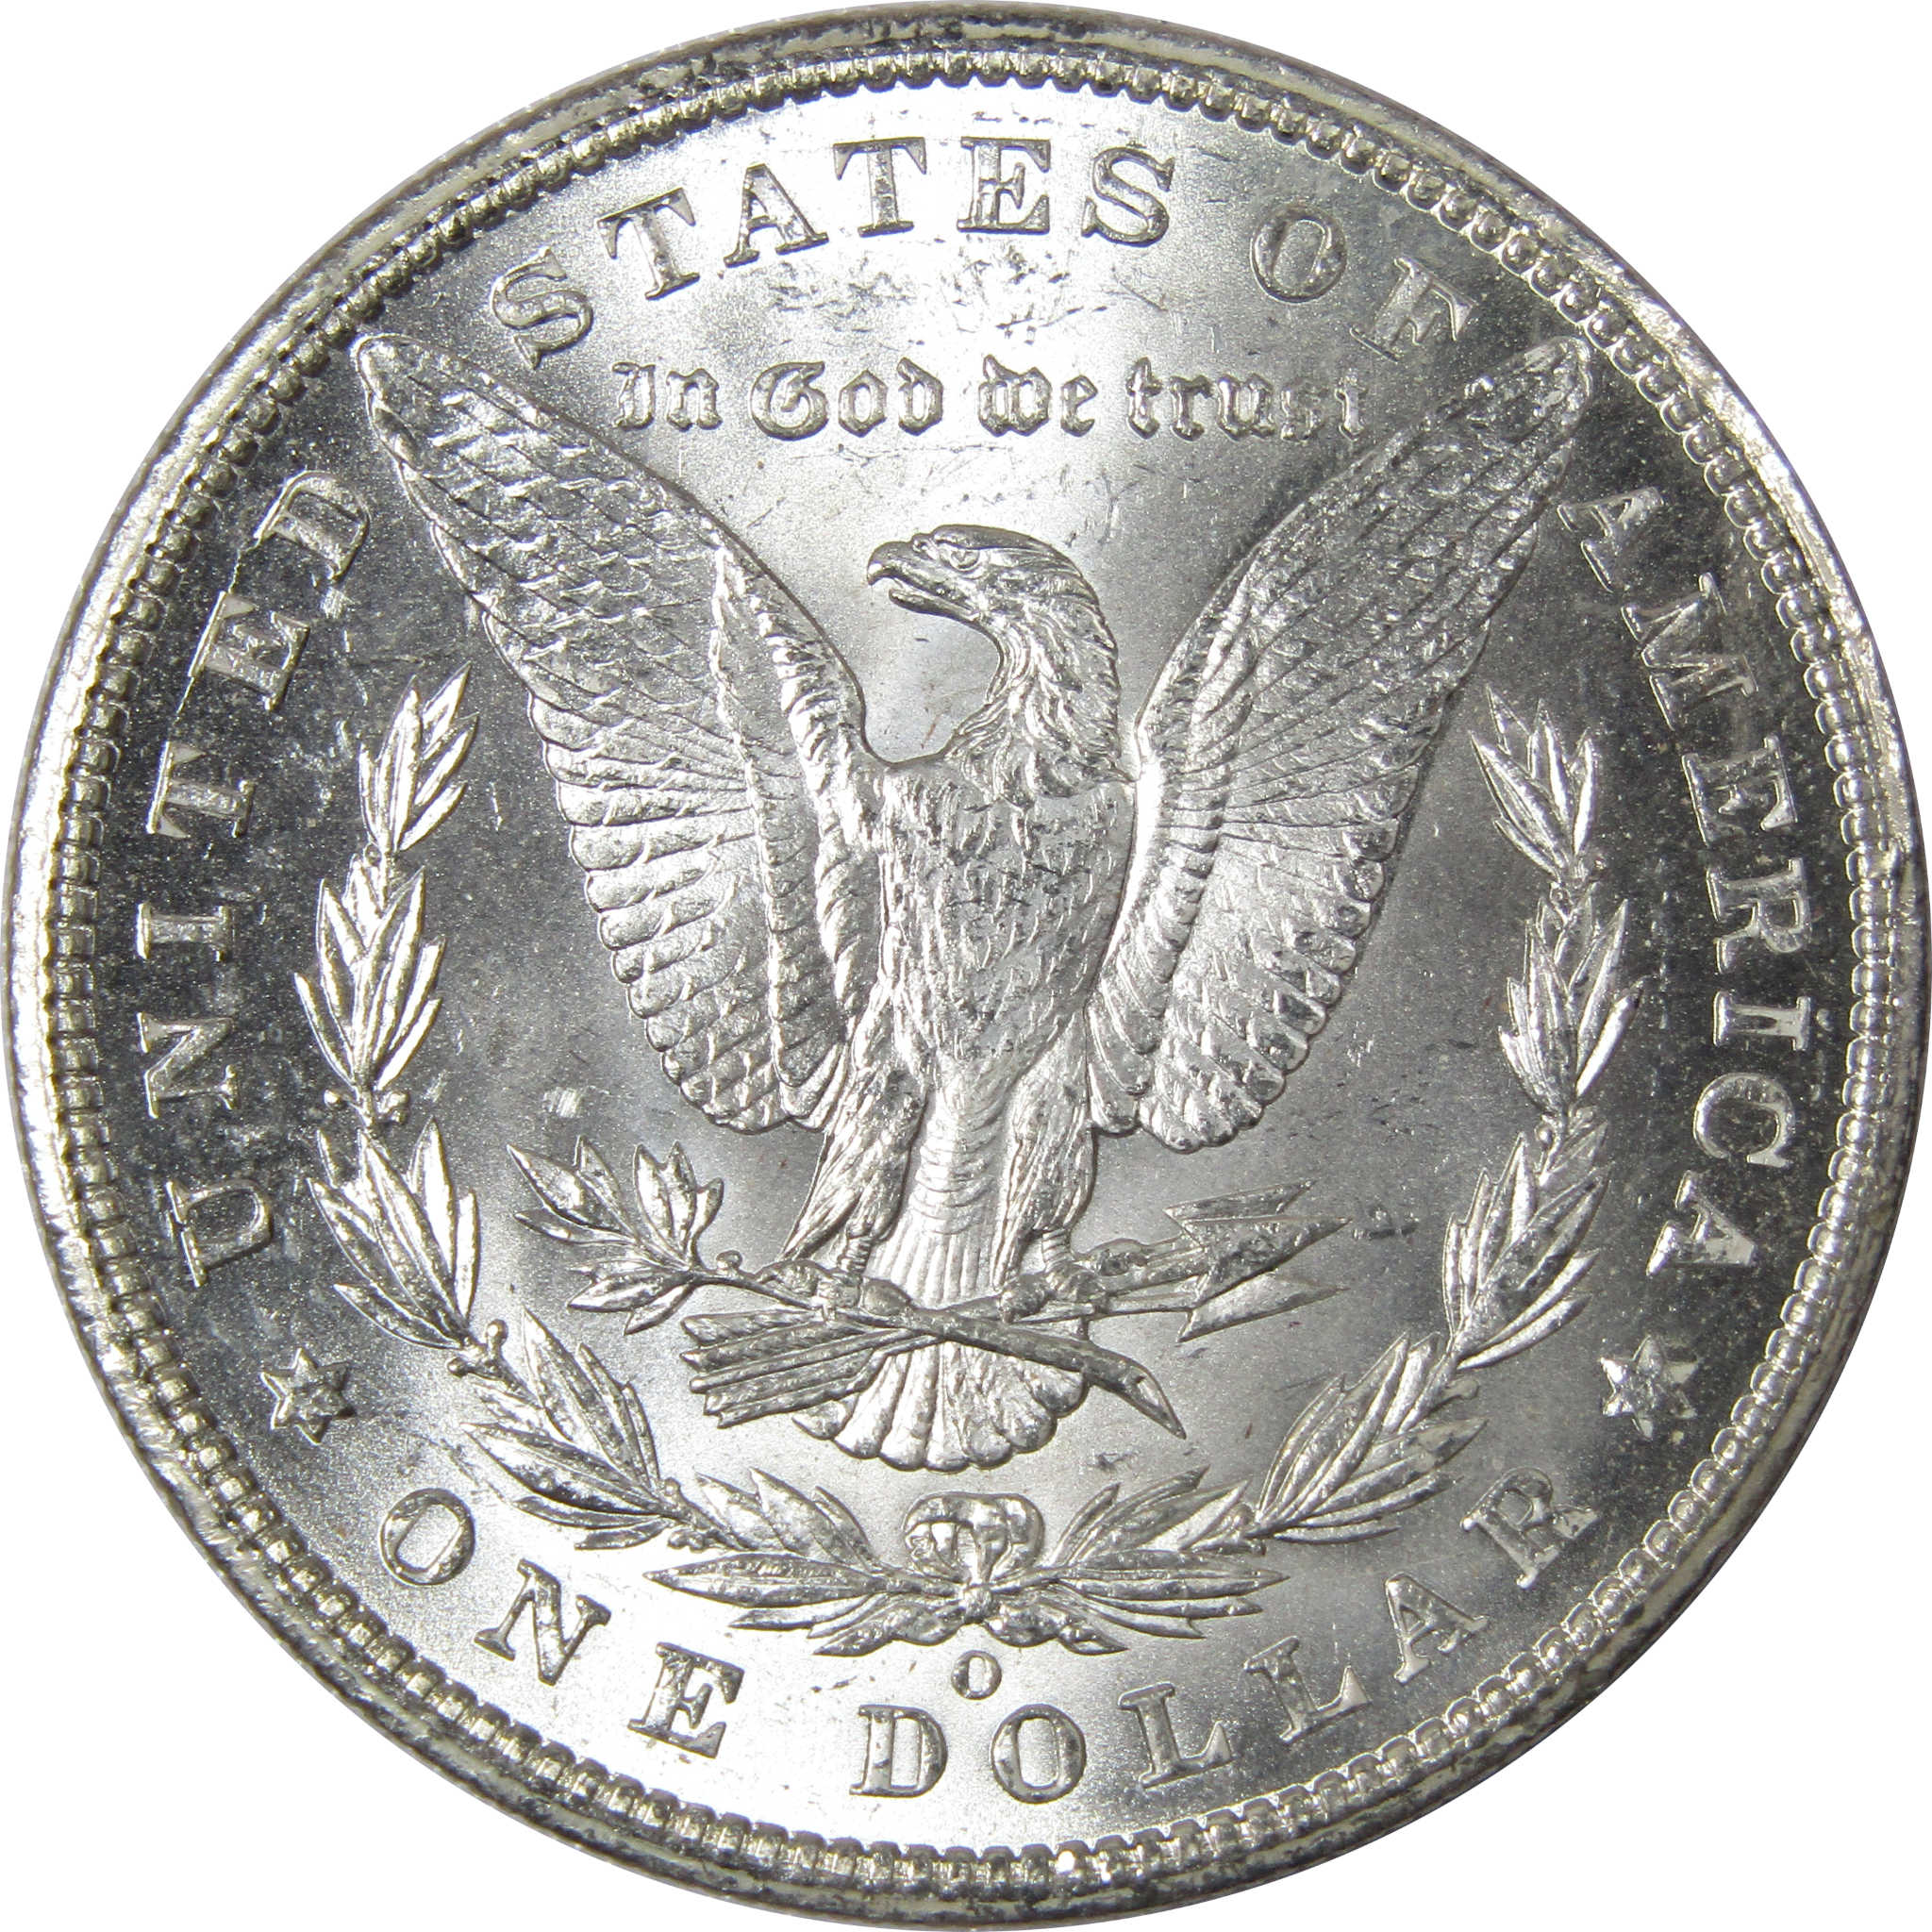 1900 O Morgan Dollar BU Uncirculated Mint State 90% Silver SKU:IPC9731 - Morgan coin - Morgan silver dollar - Morgan silver dollar for sale - Profile Coins &amp; Collectibles